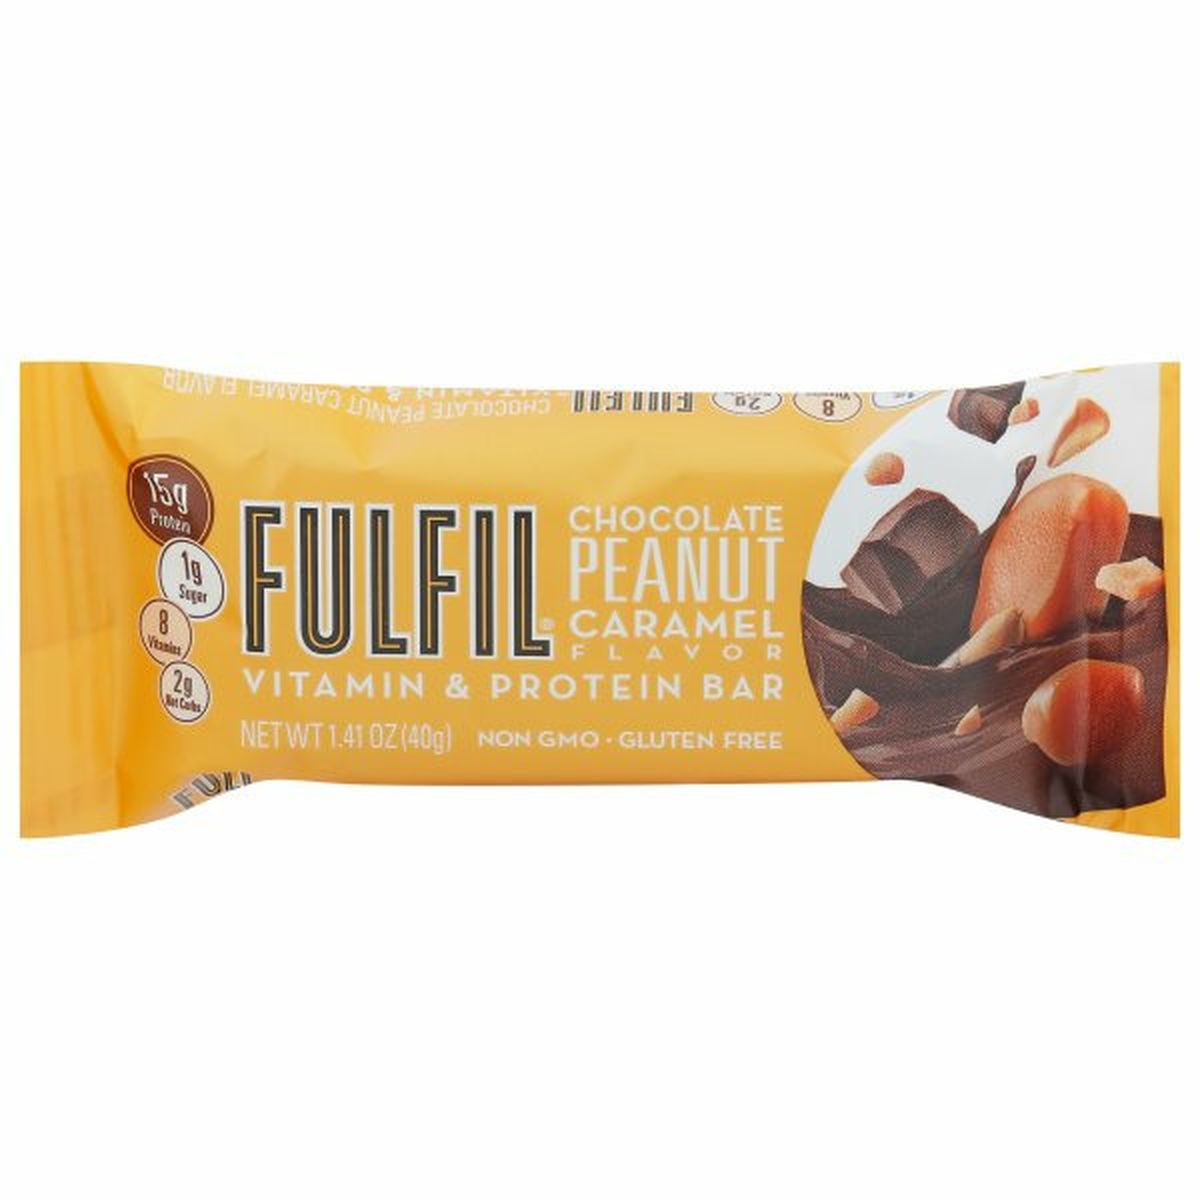 Calories in Fulfil Vitamin & Protein Bar, Chocolate Peanut Caramel Flavor